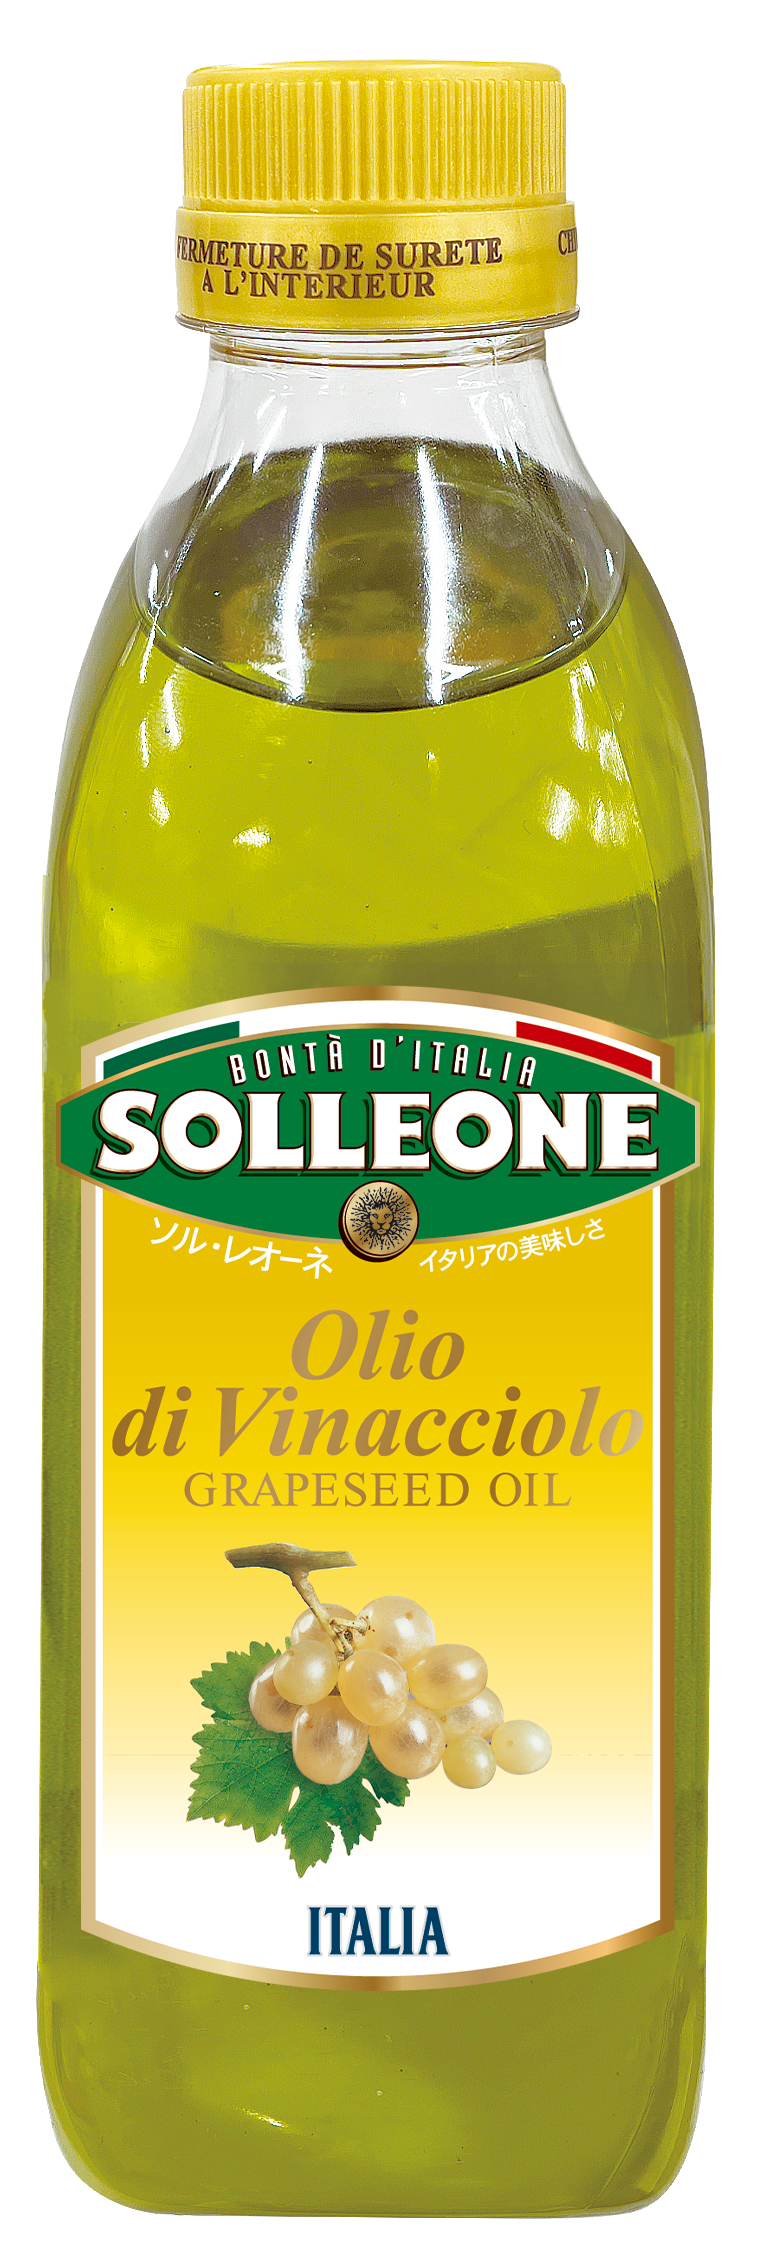  SOLLEONE Olio di Vinacciolo 500ml ソル・レオーネ グレープシード･オイル 500ml